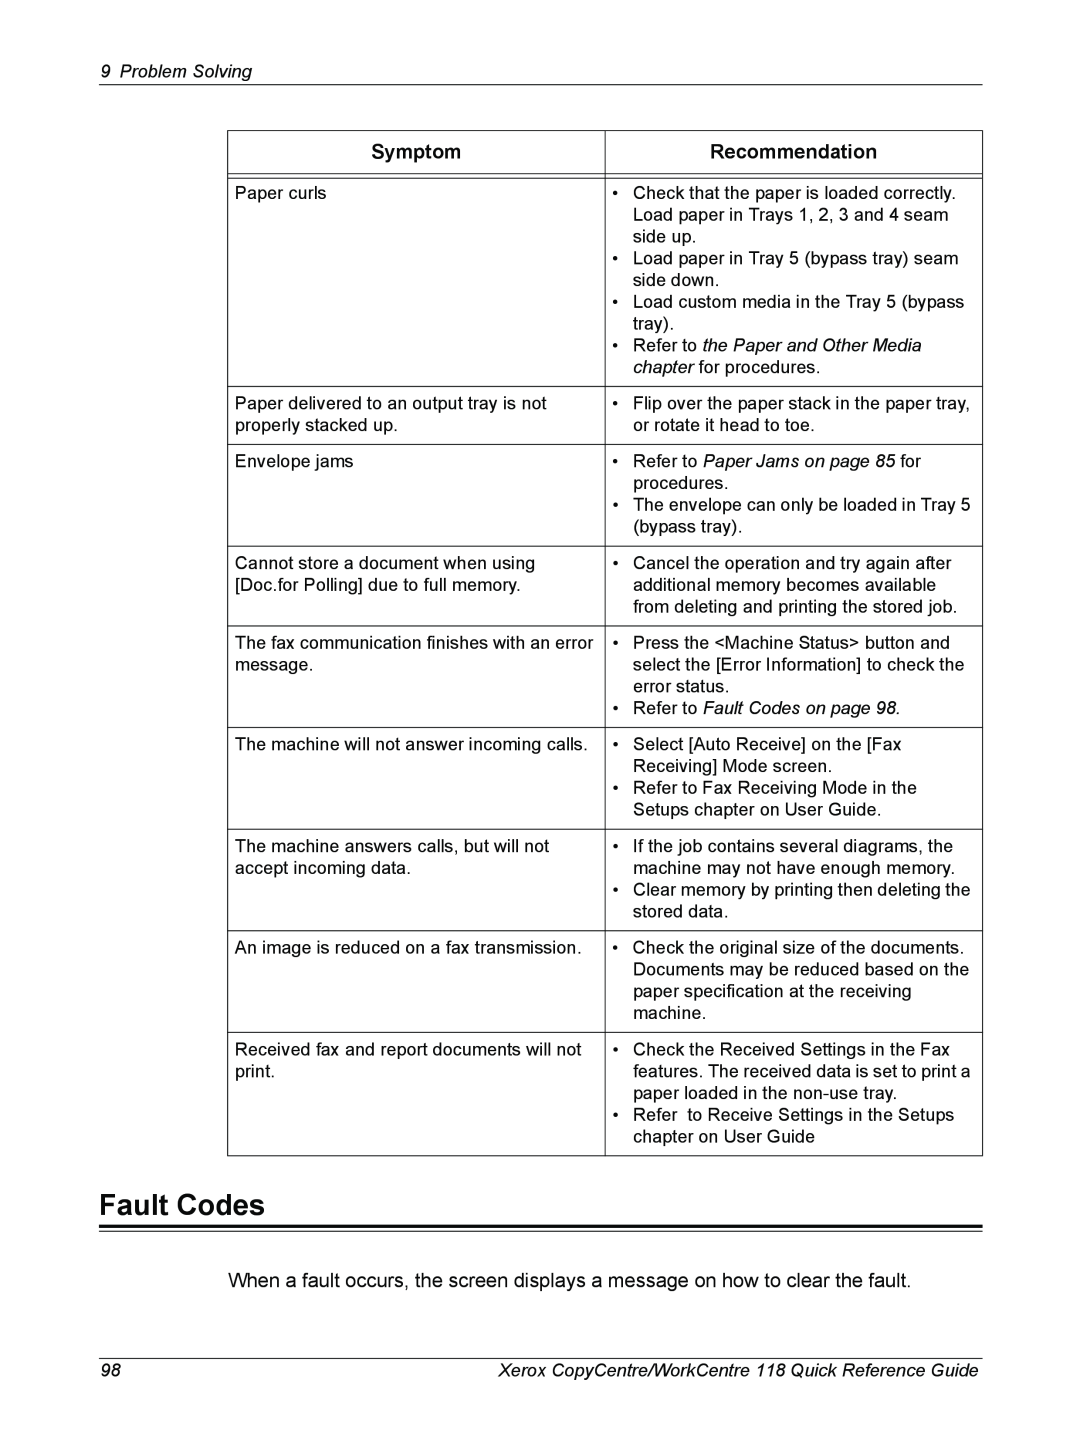 Xerox M118i, C118 manual Fault Codes, Symptom, Recommendation 